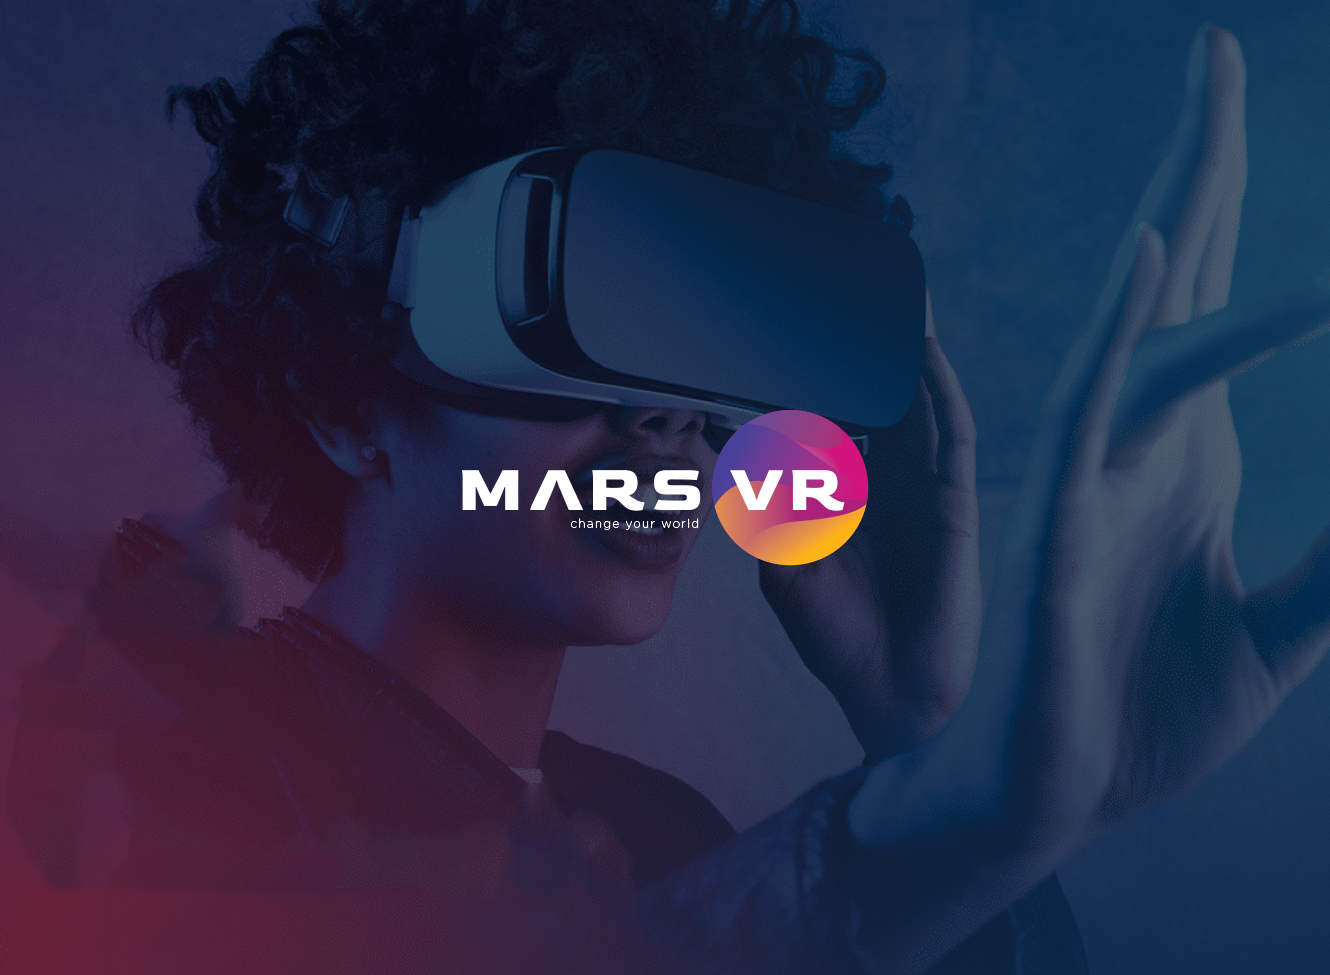 Mars virtual reality-based theme park